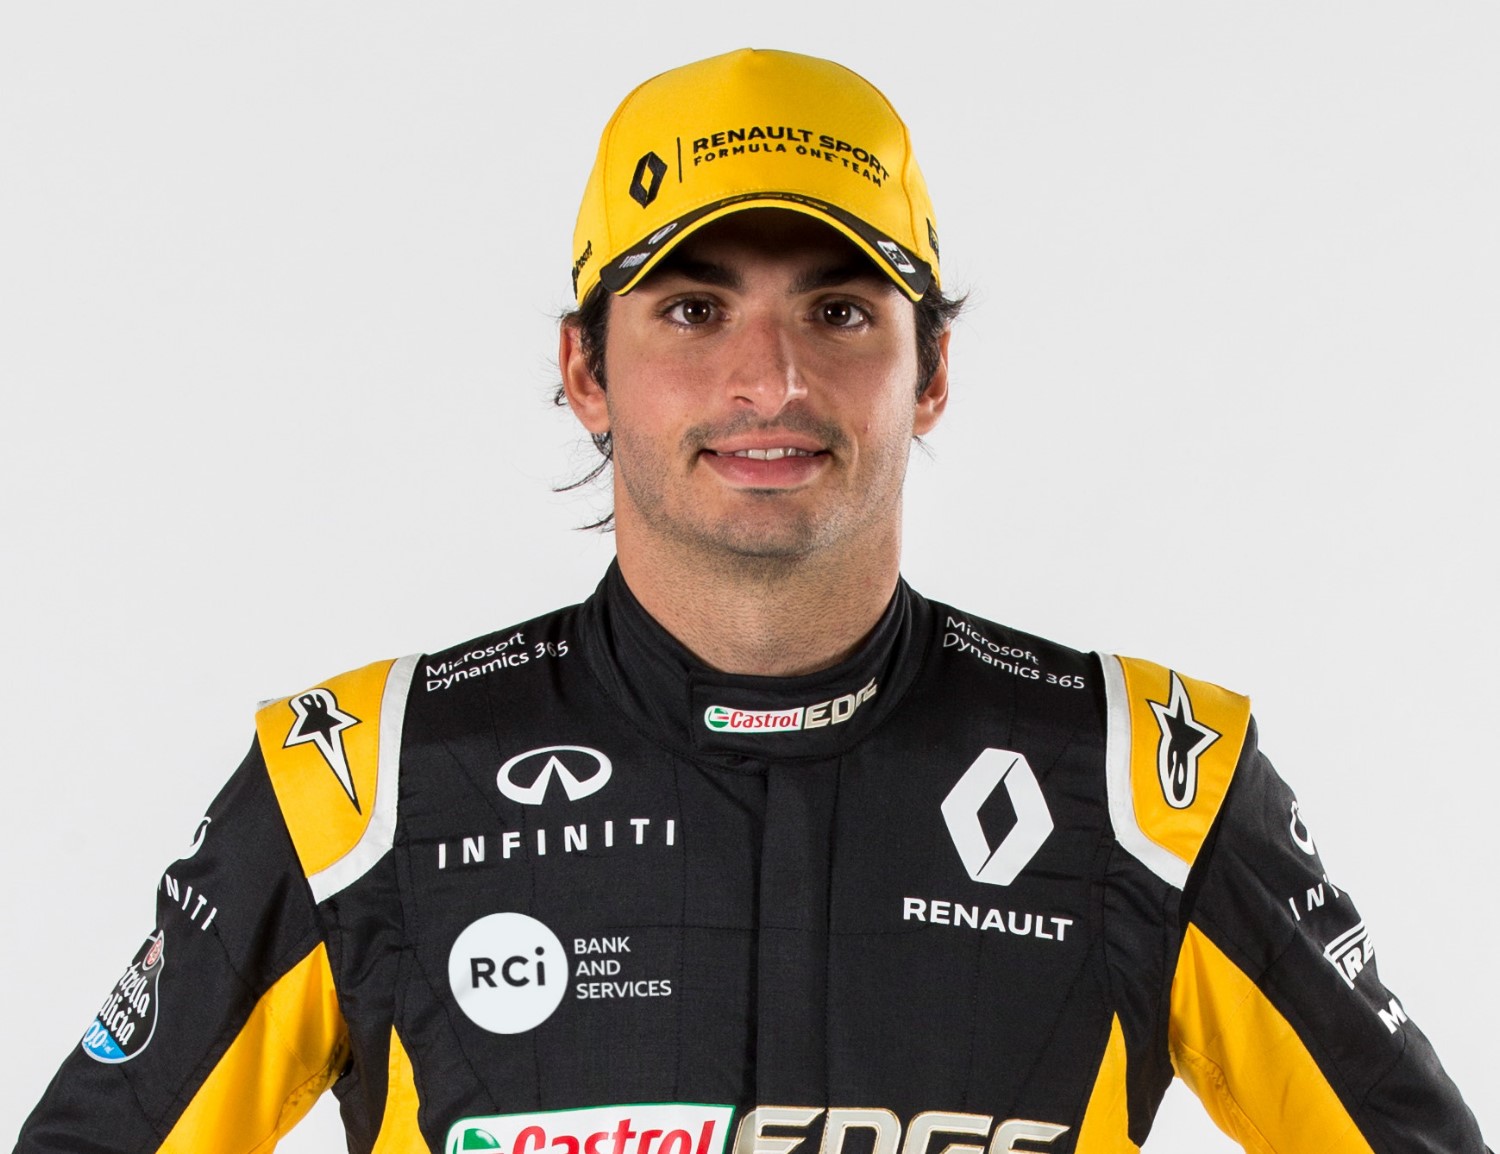 Sainz Jr. buried Hulkenberg on his Renault debut